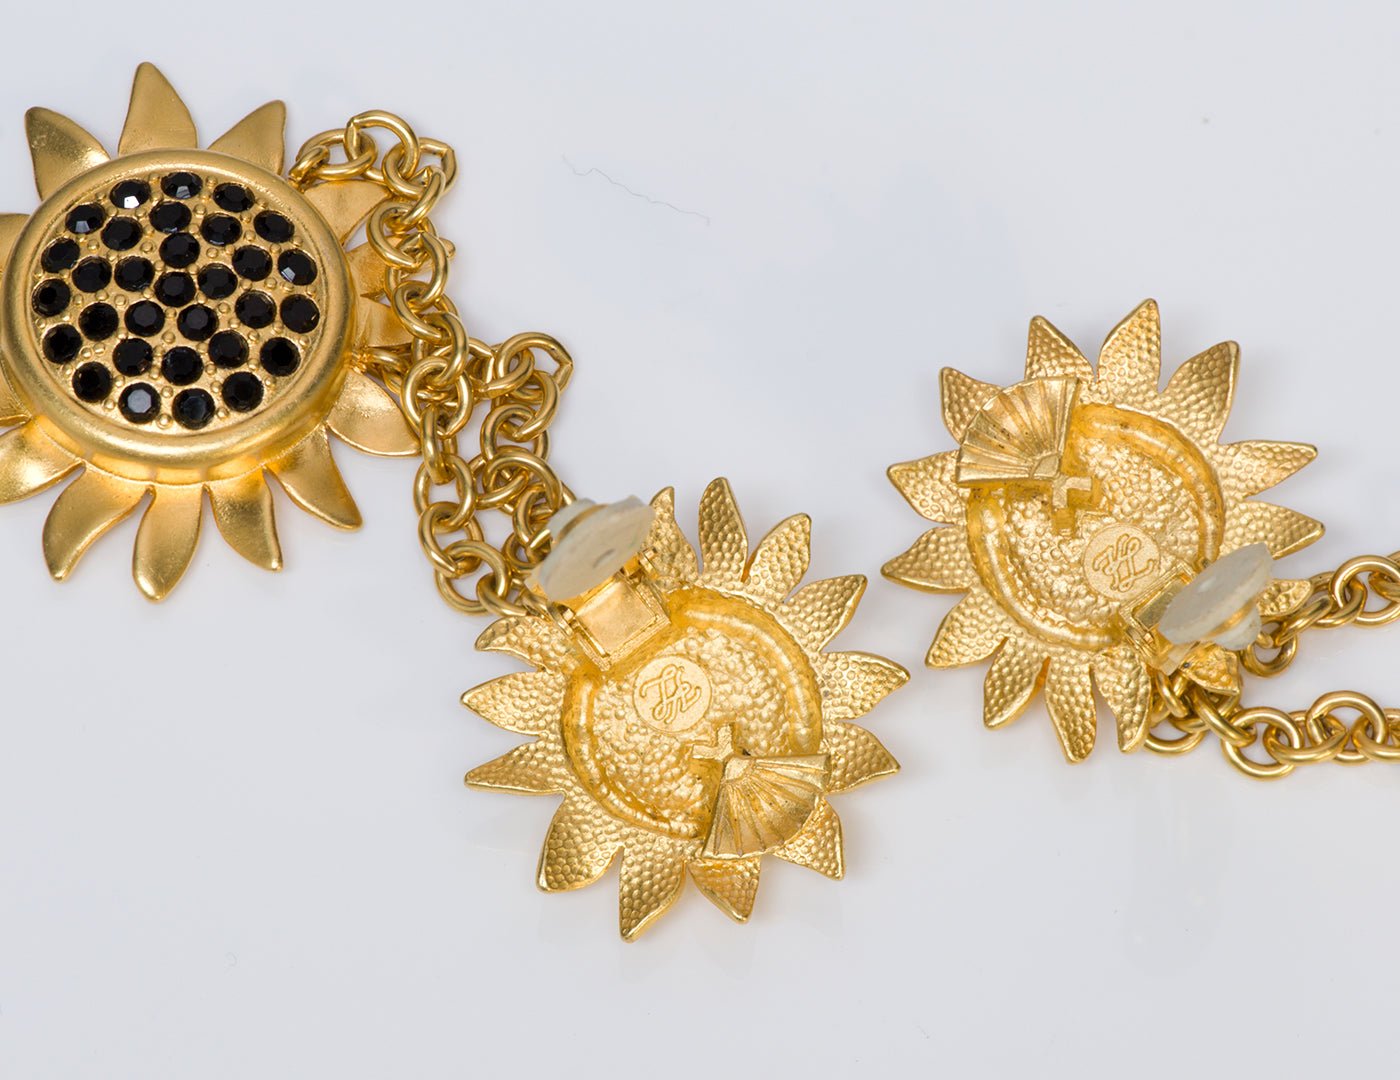 Karl Lagerfeld Gold Tone Crystal Sunflower Earrings